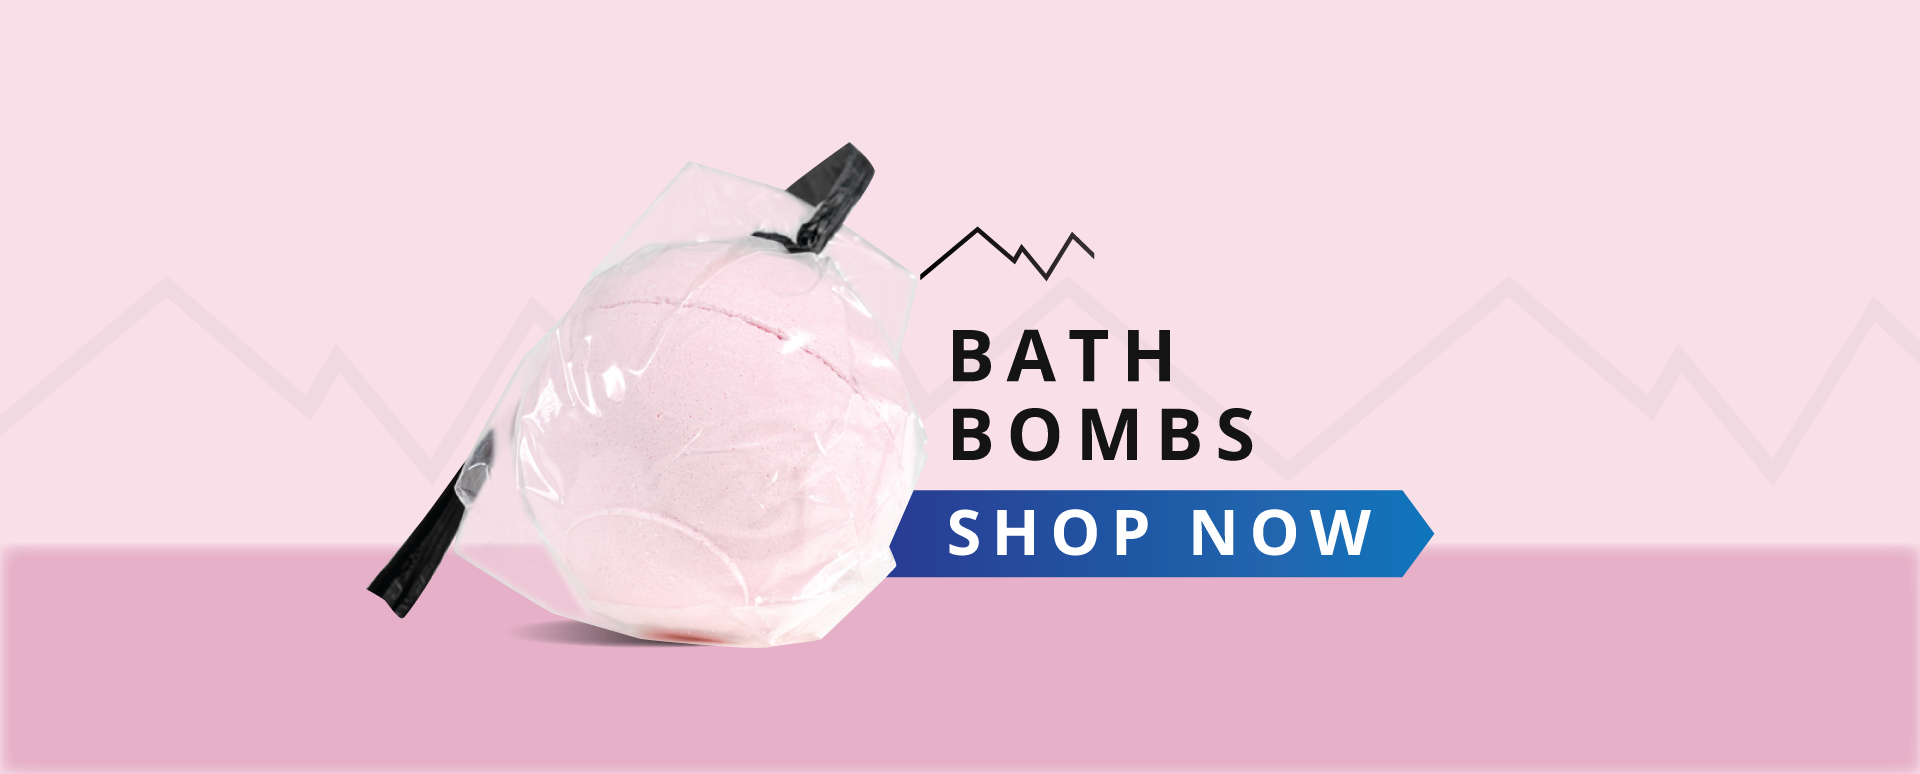 cbd bath bombs wholesale, Dushey UK and EU, Pink web banner